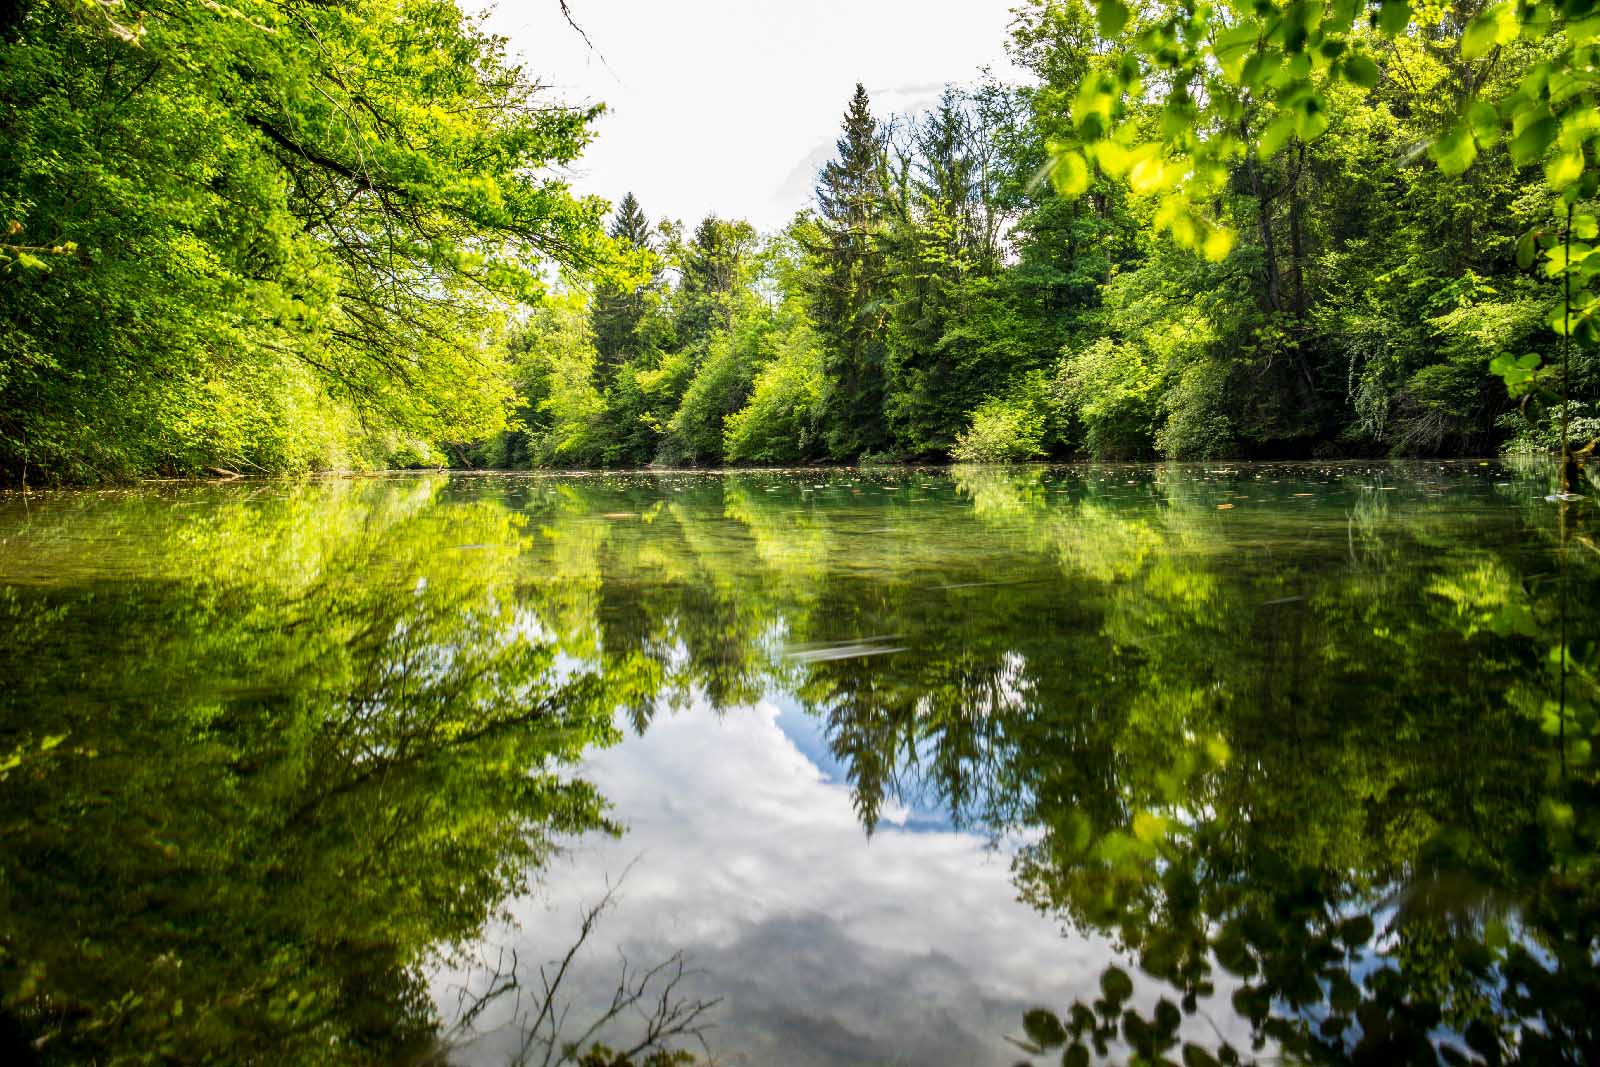 Pond reflecting dense shore of green trees